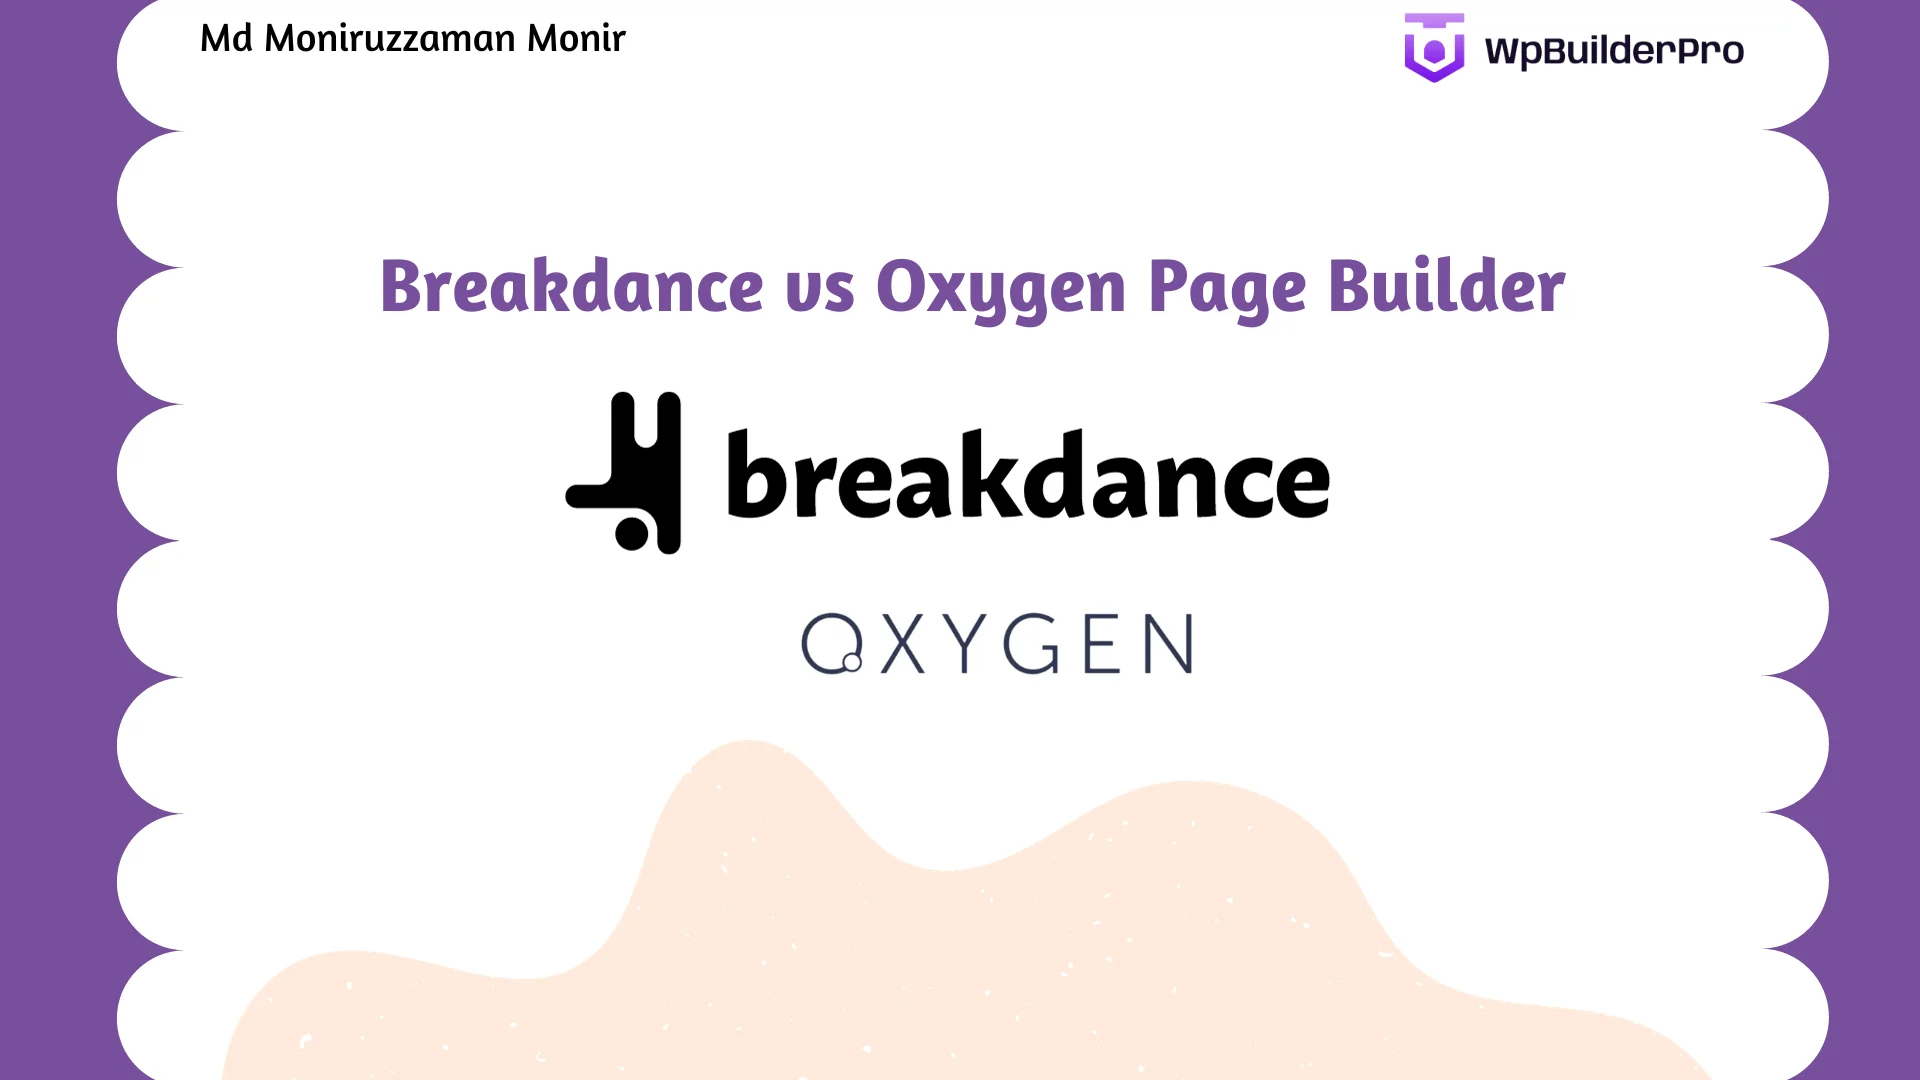 Breakdance page builder vs Oxygen Page Builder